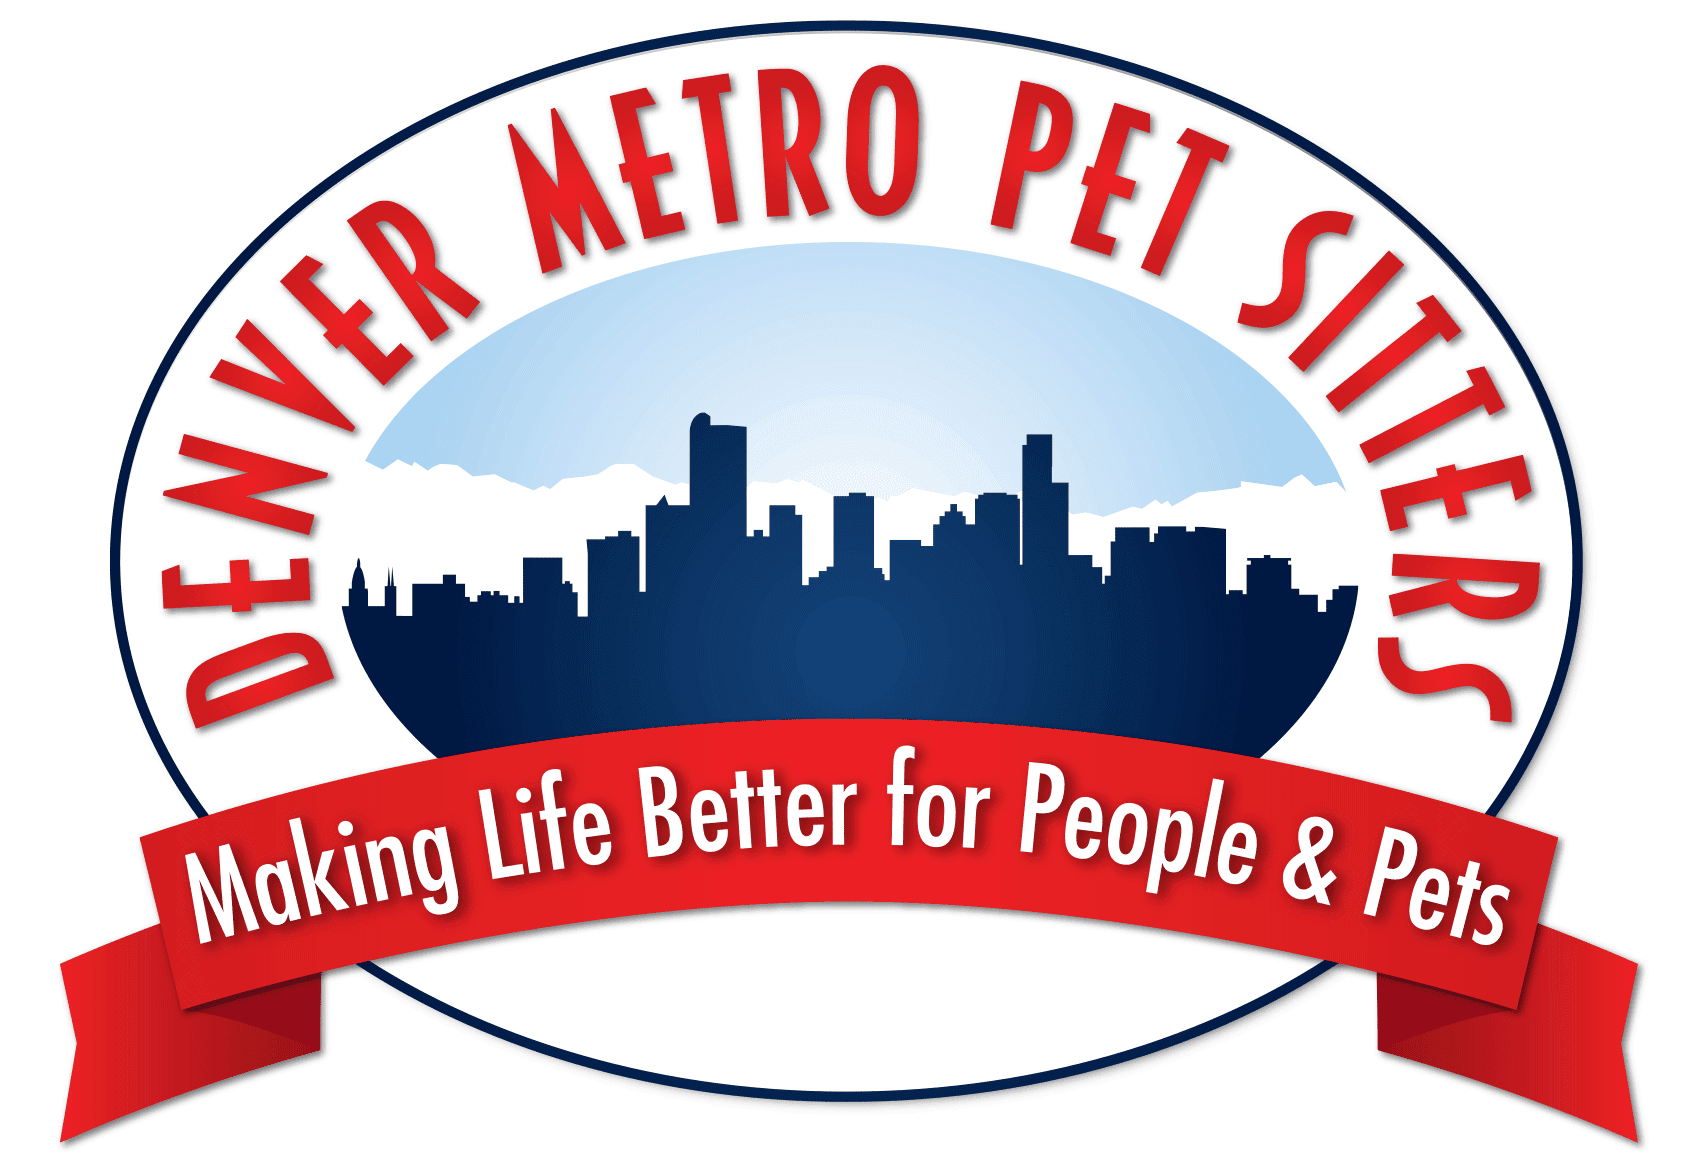 Denver Metro Pet Sitters LLC